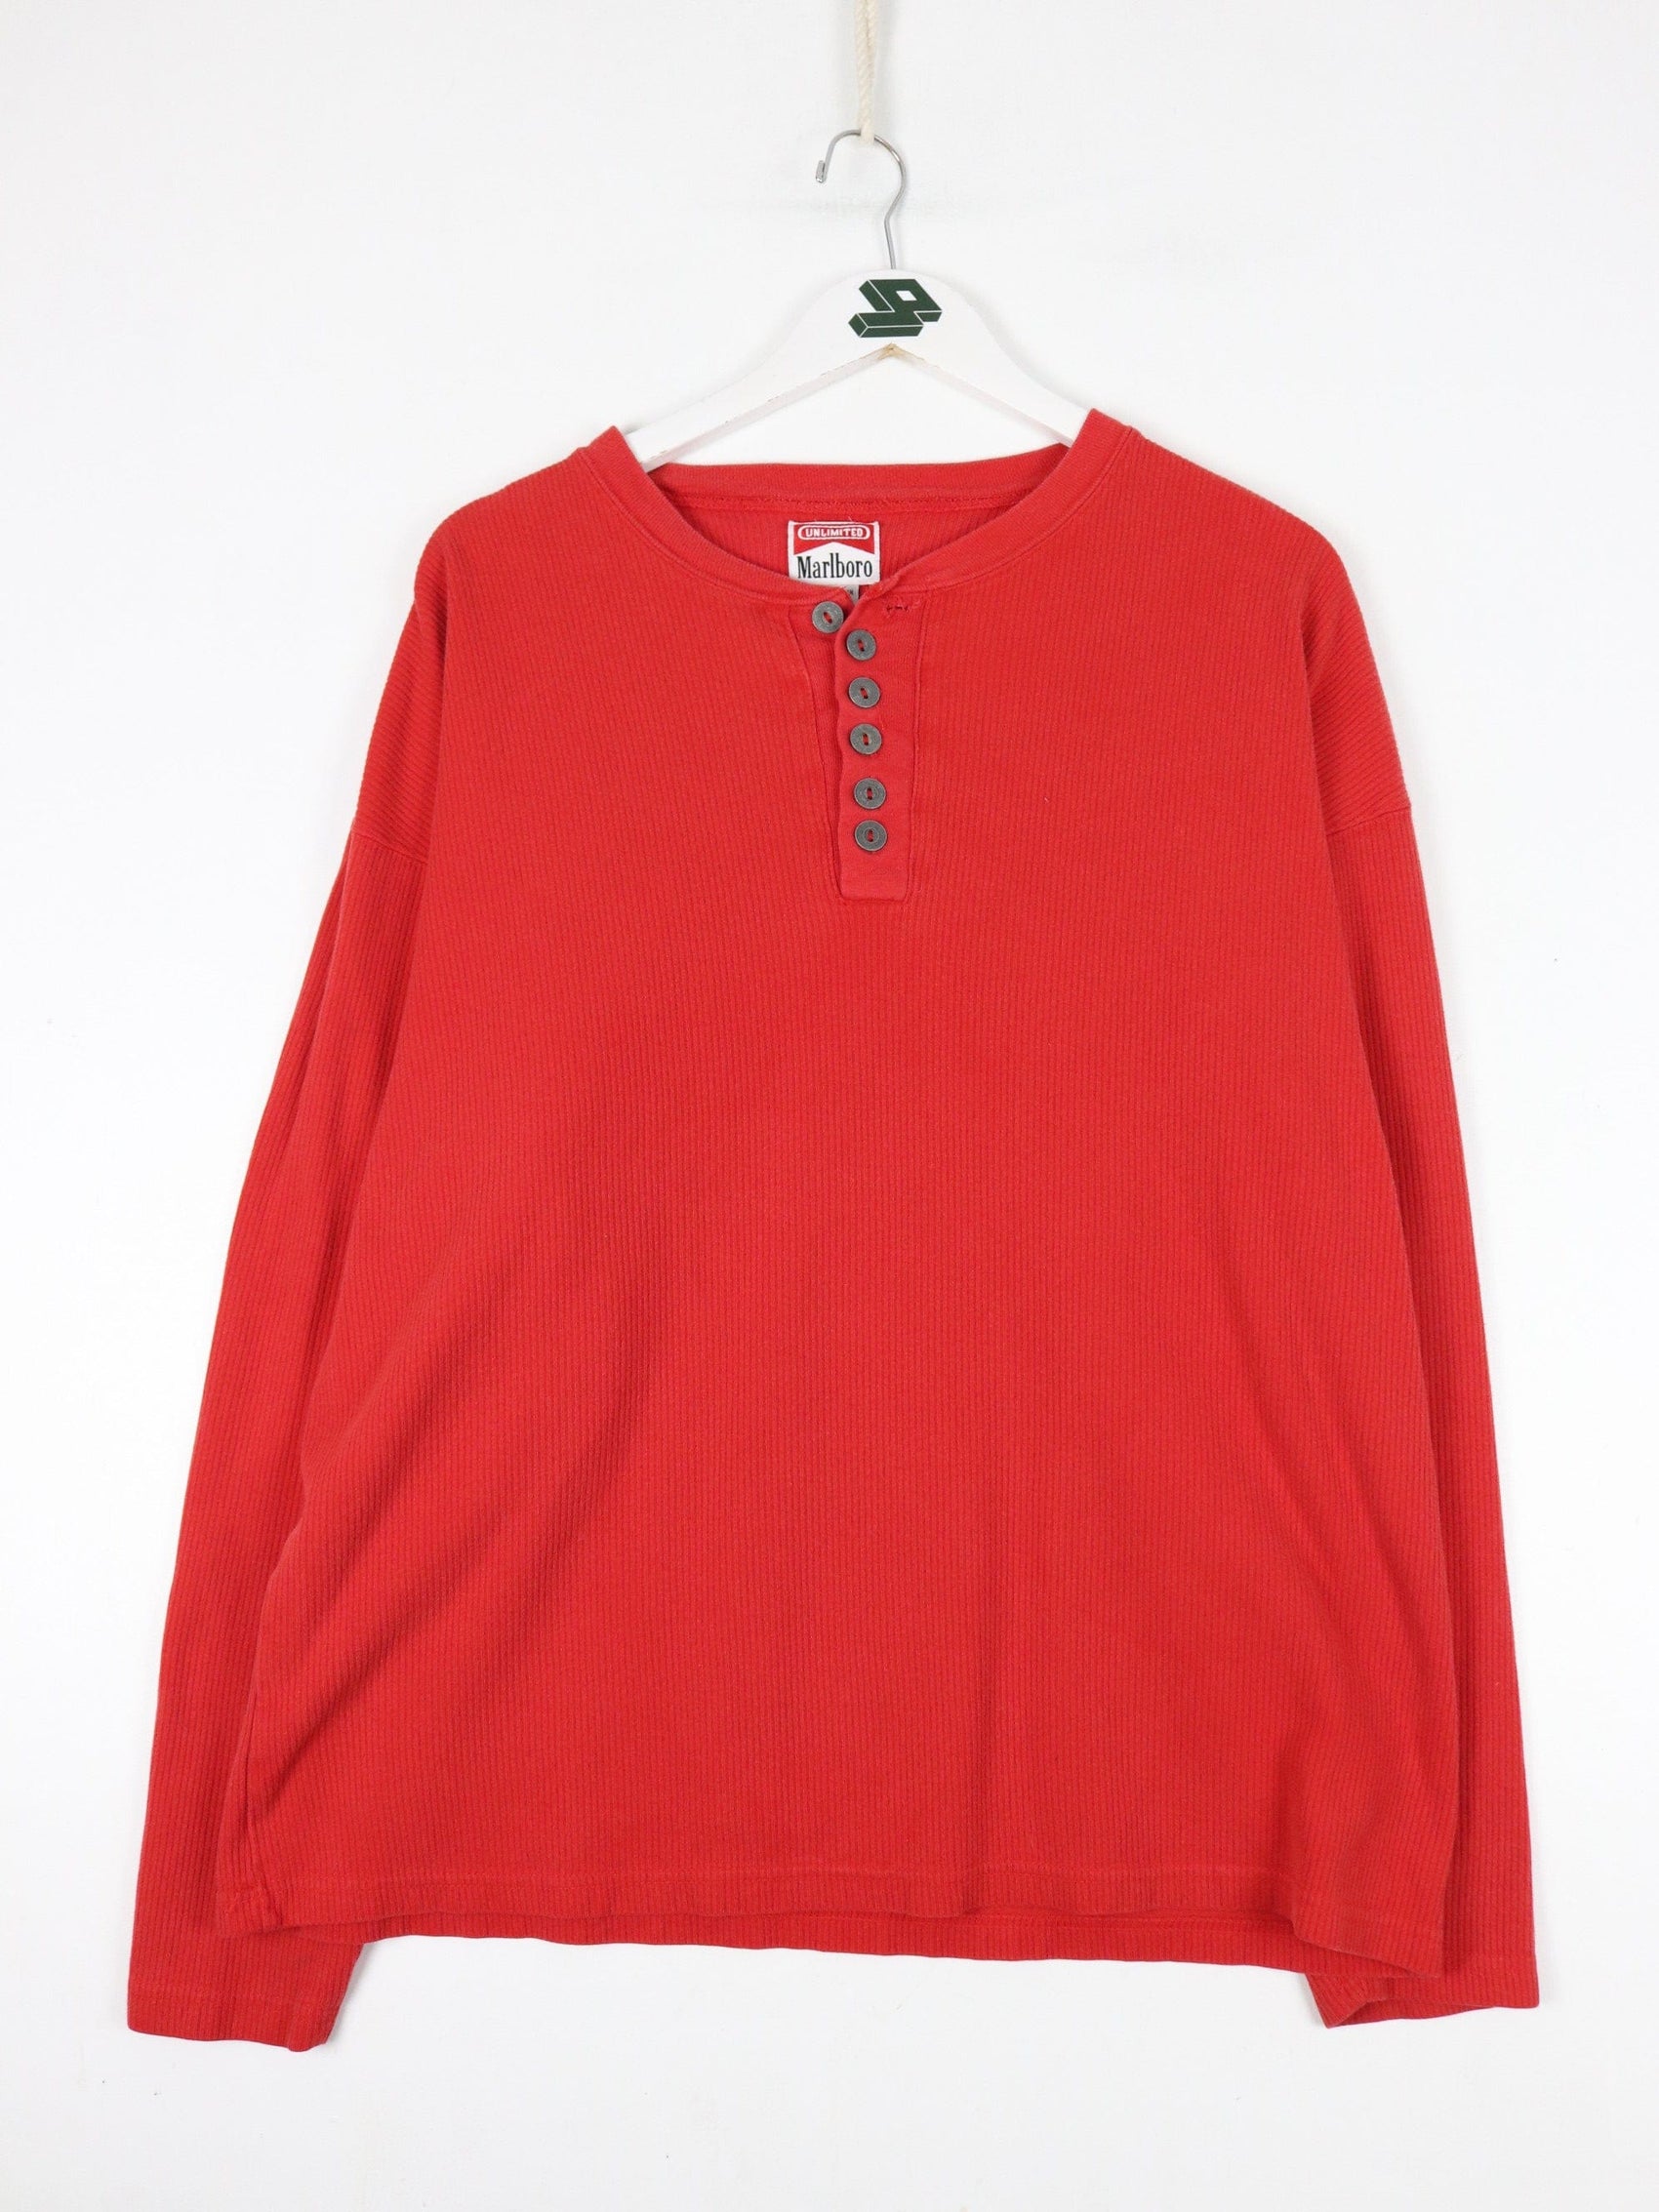 Marboro Button Up Shirts Vintage Marlboro Henley Shirt Mens XL Red Ribbed Long Sleeve